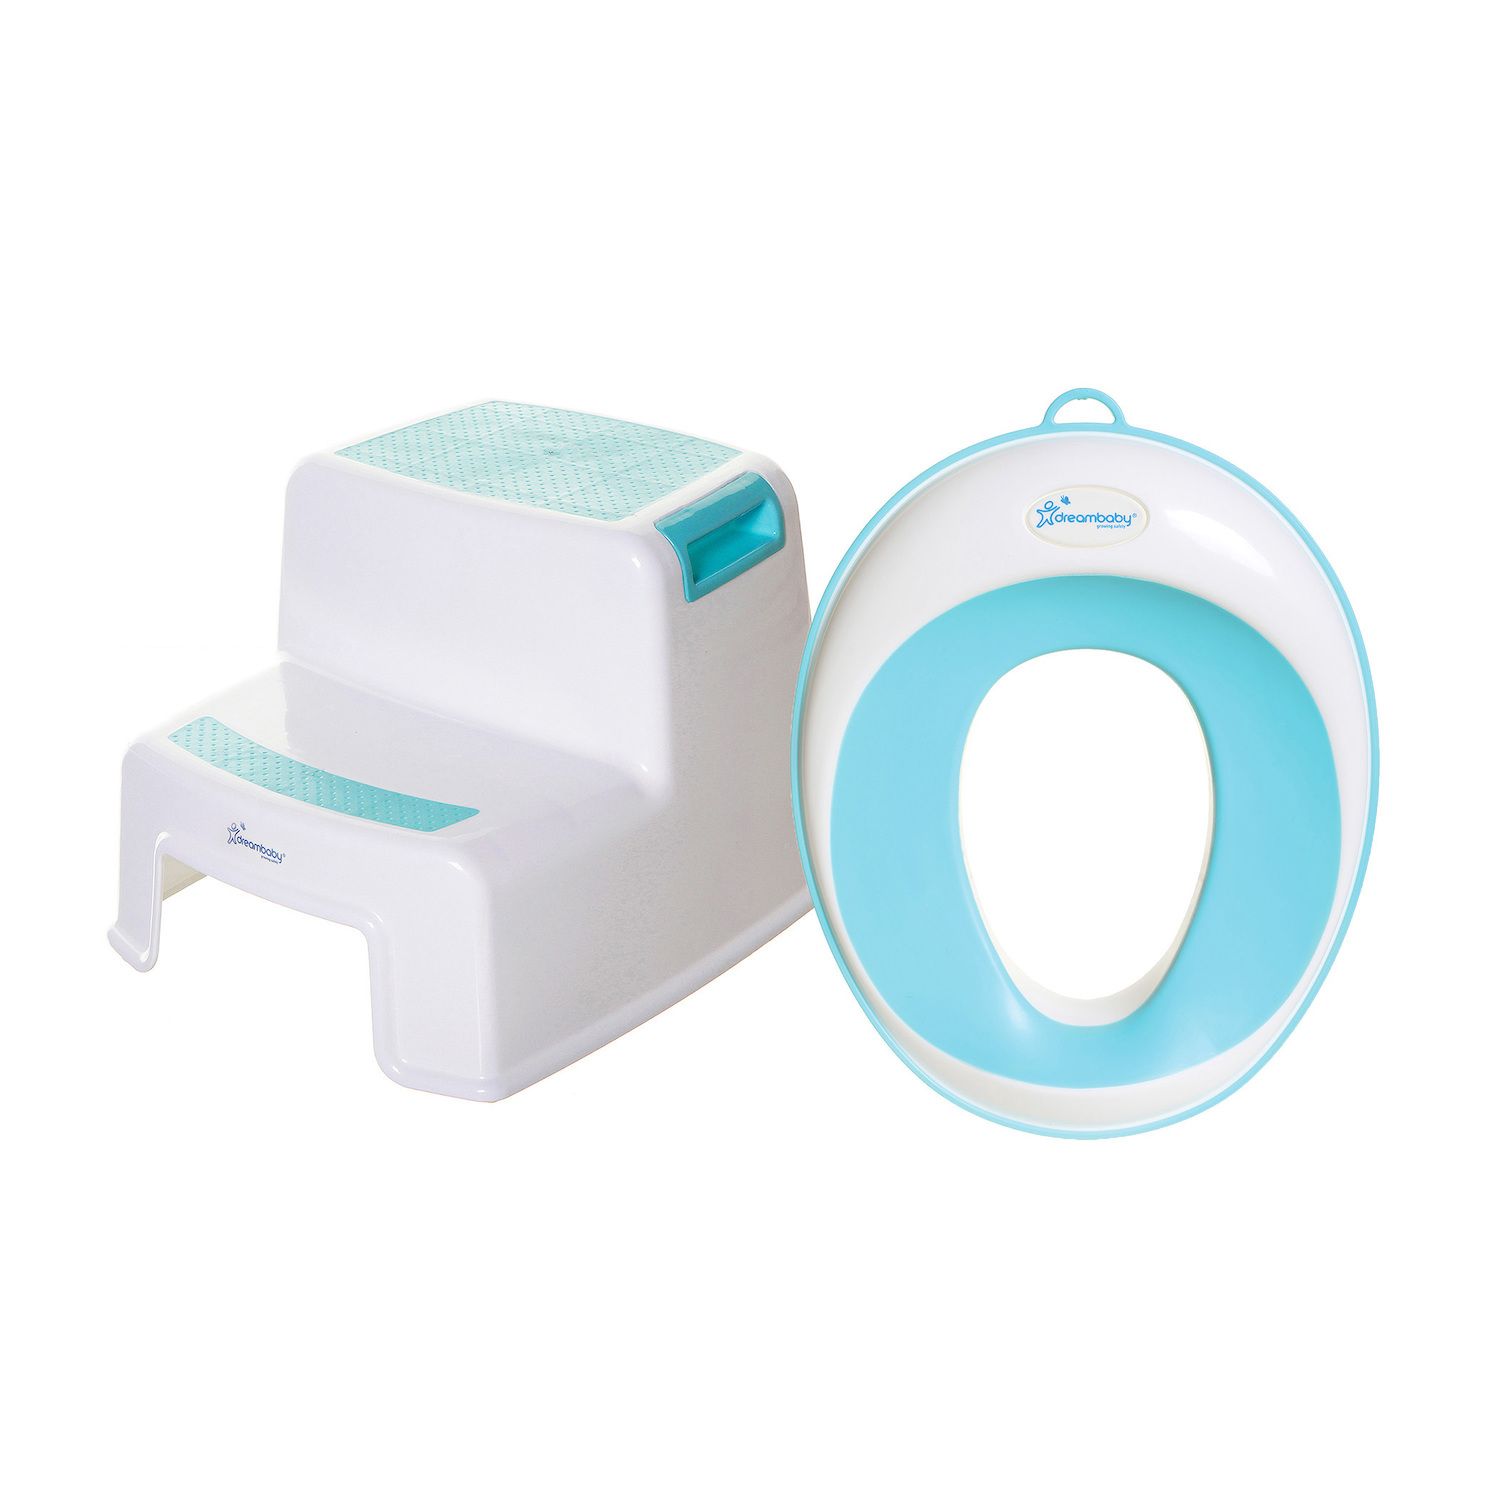 \u0026 EZY- Toilet Training Potty Seat Combo